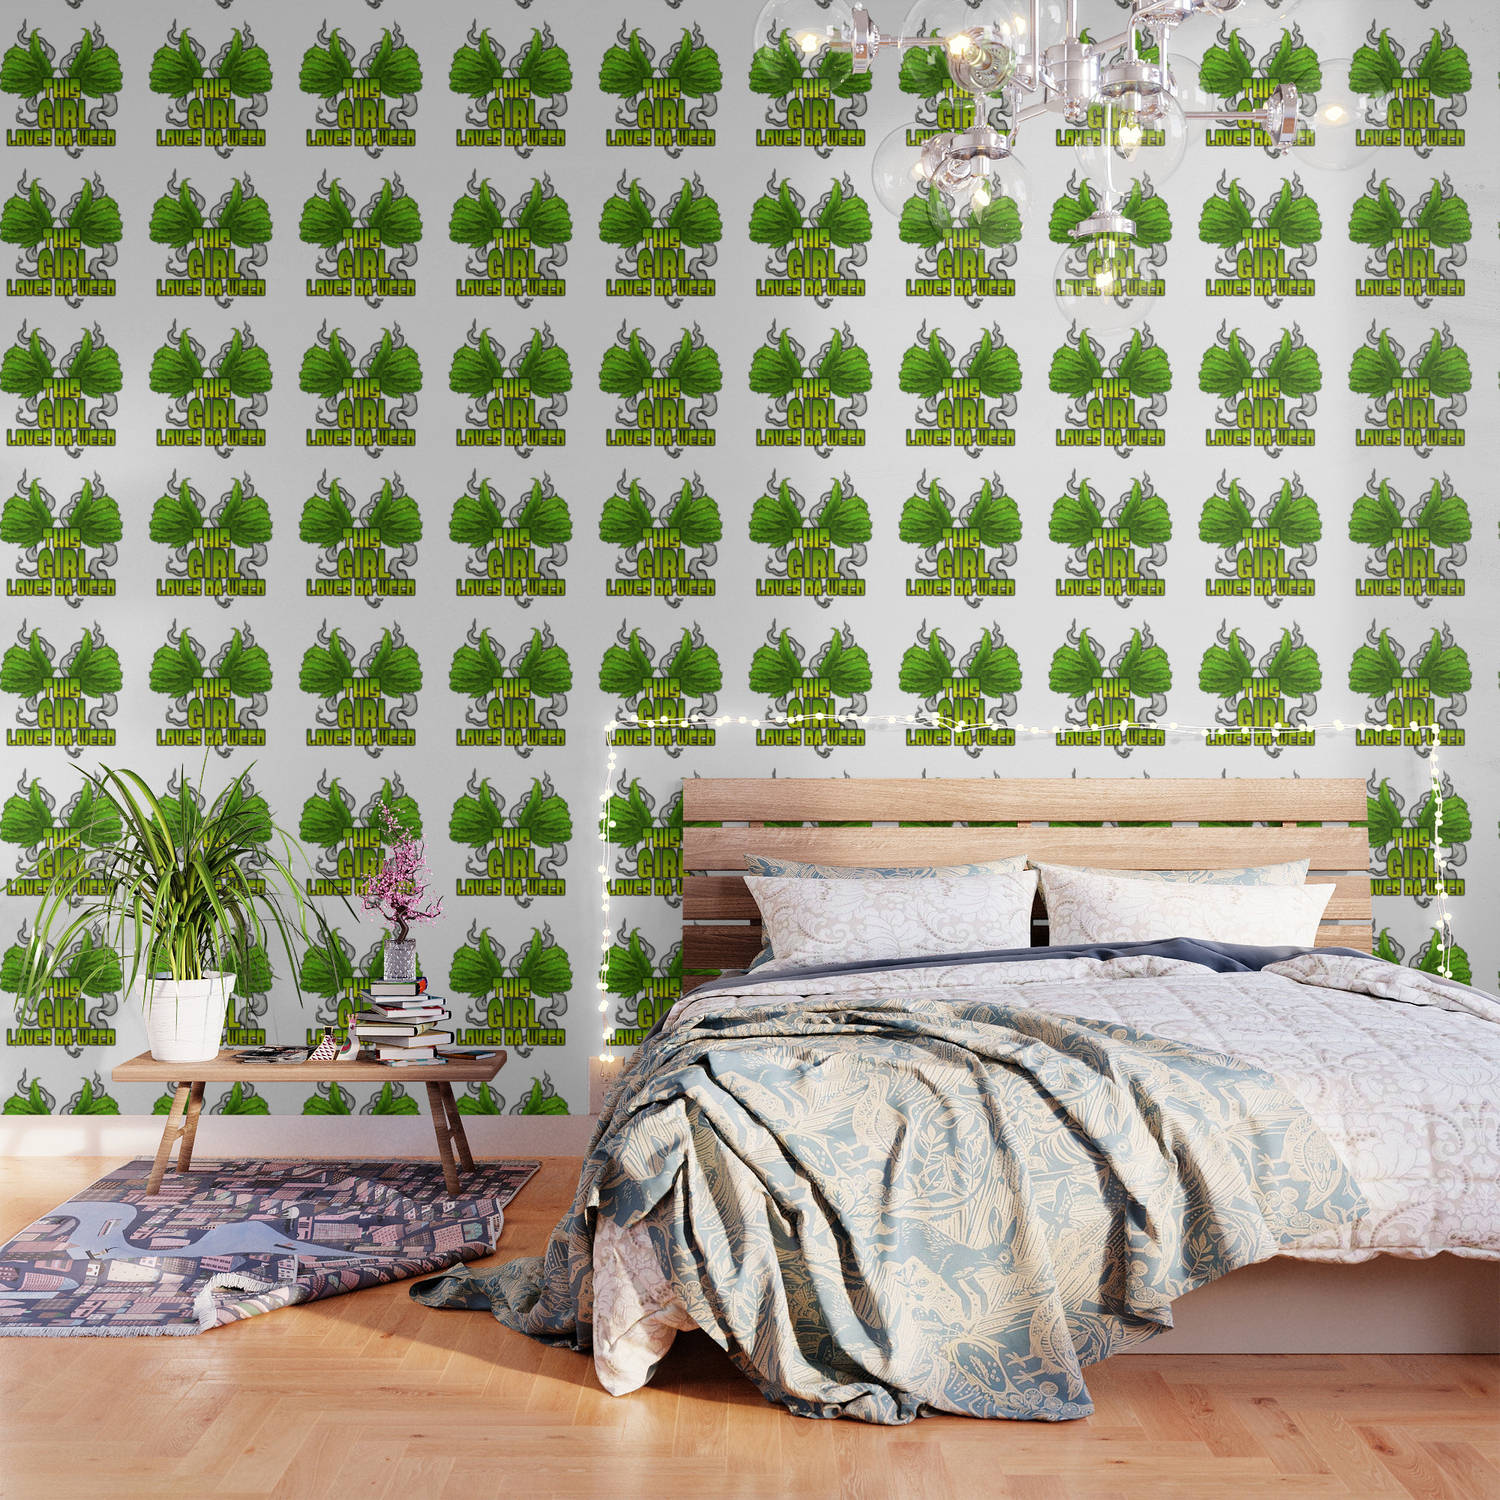 Classic Weed Aesthetic Wall Bedroom Wallpaper